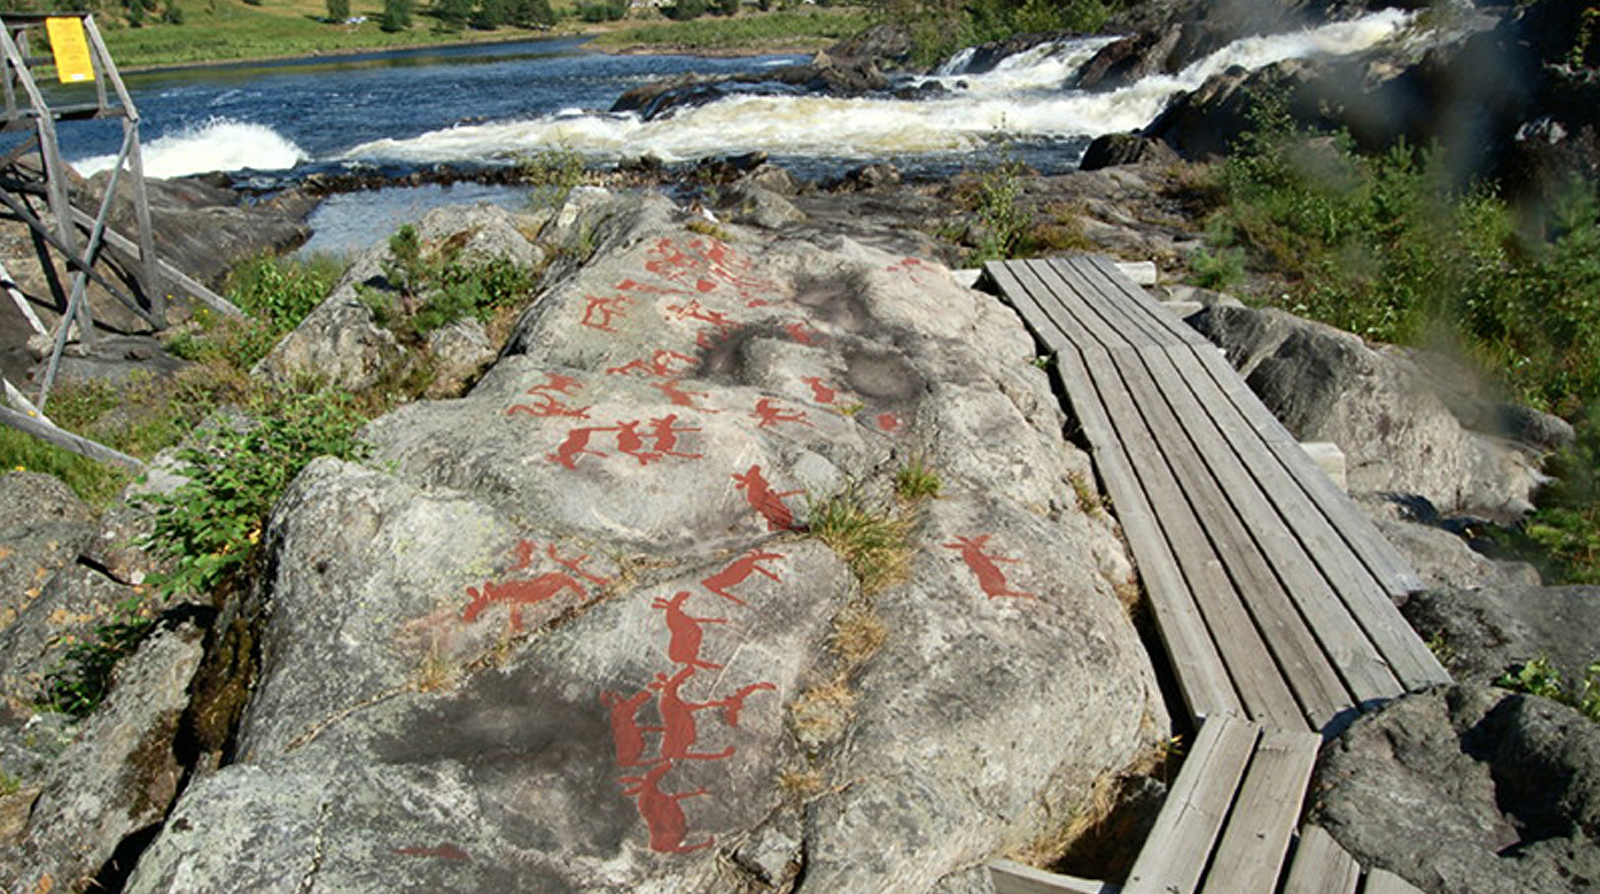 Nämfors Rock Art Petroglyphs Tanum Rock Art Museum Sweden